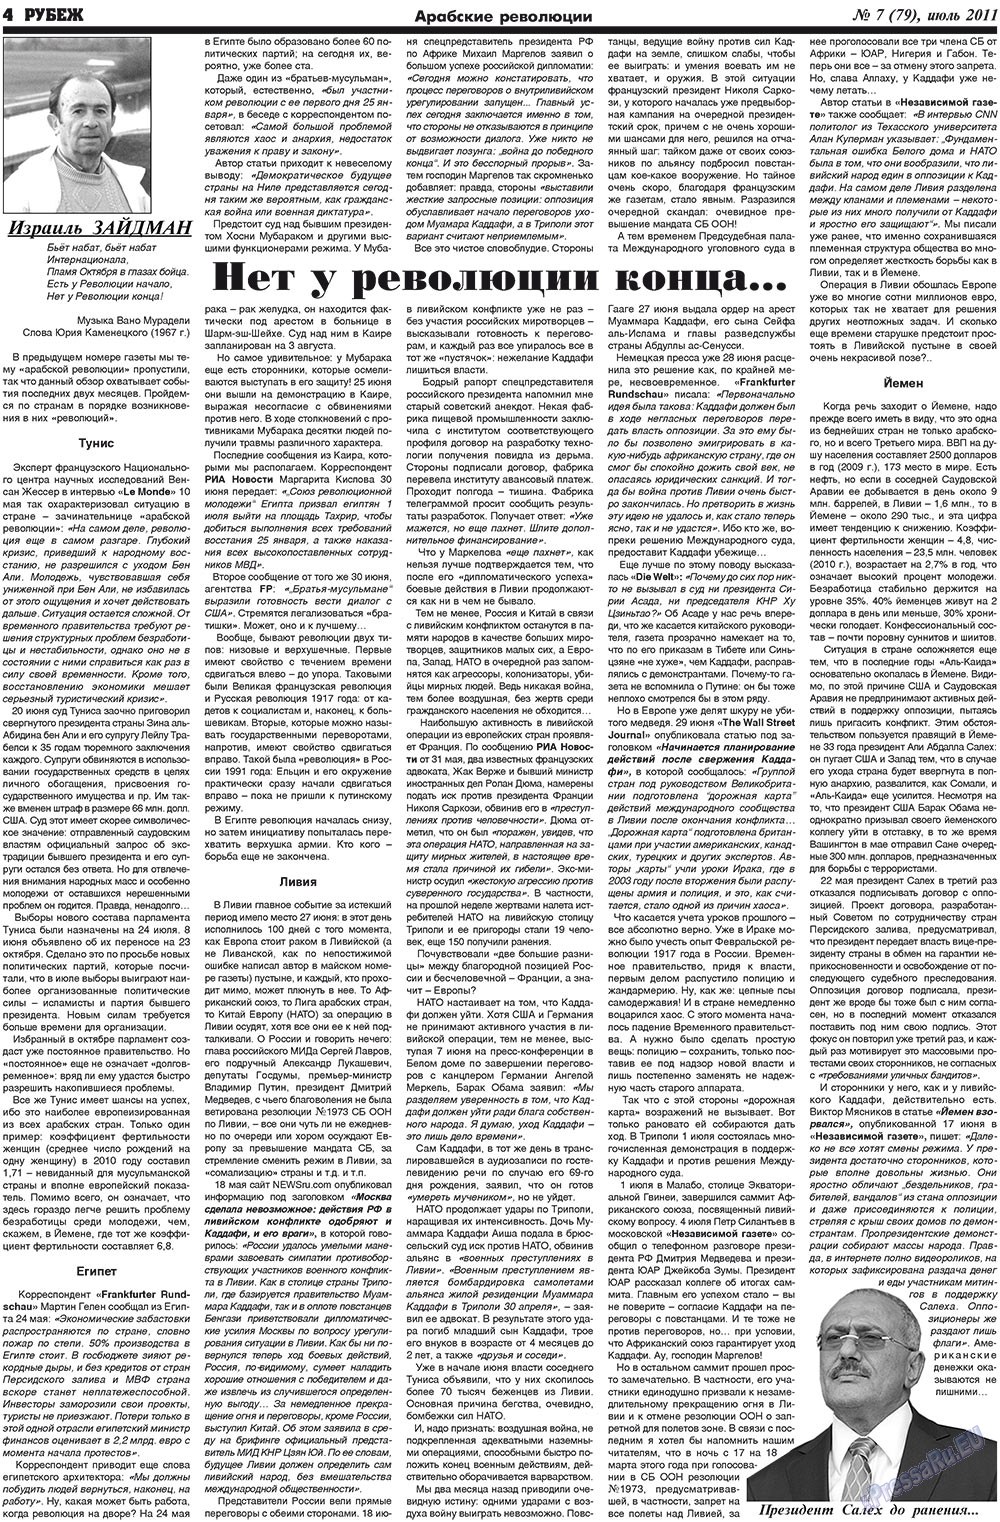 Рубеж, газета. 2011 №7 стр.4